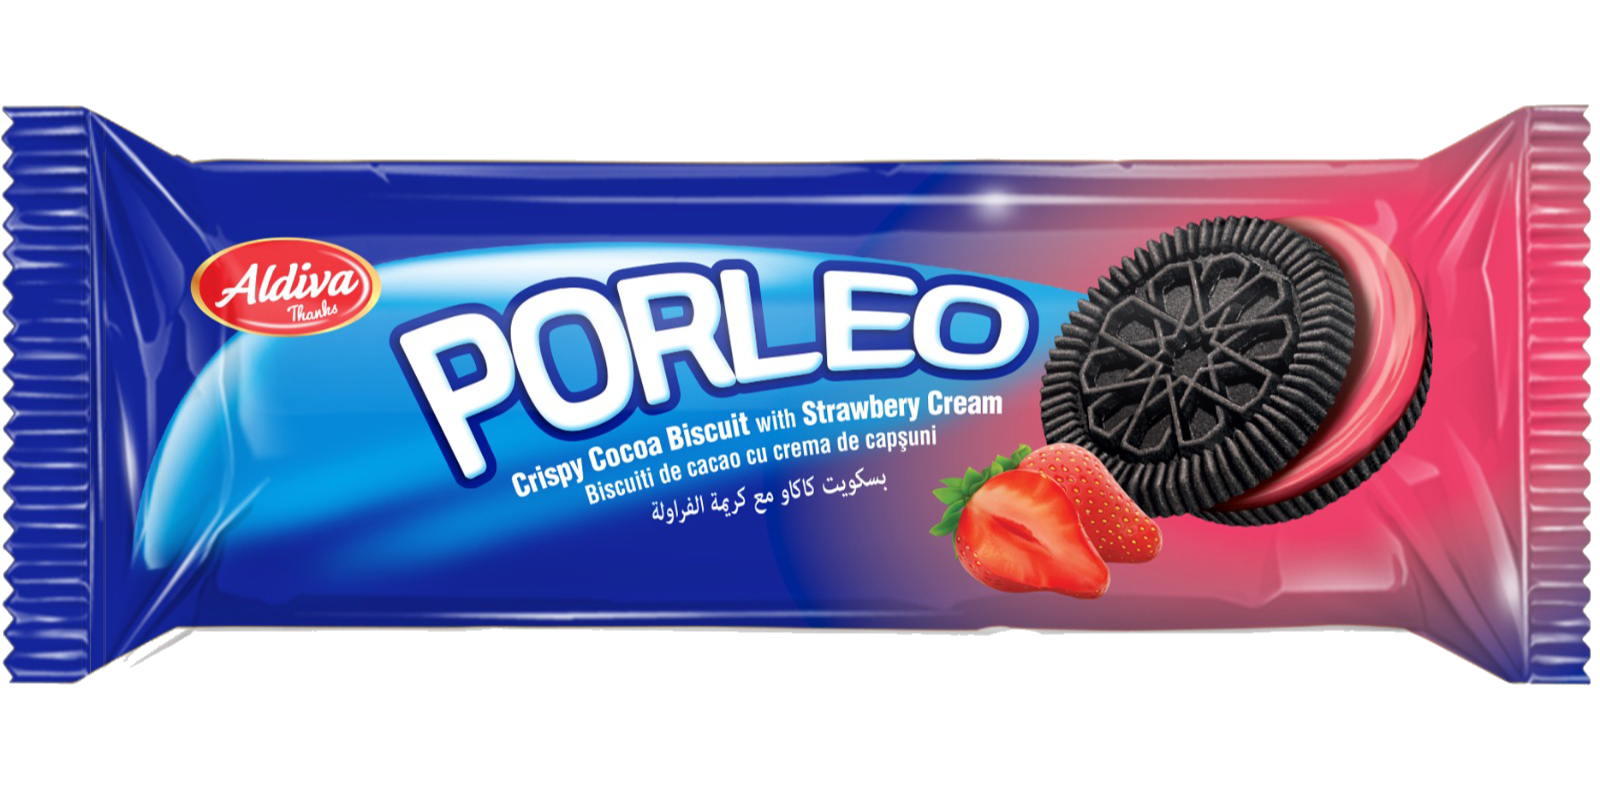 Porleo Strawbery Cream